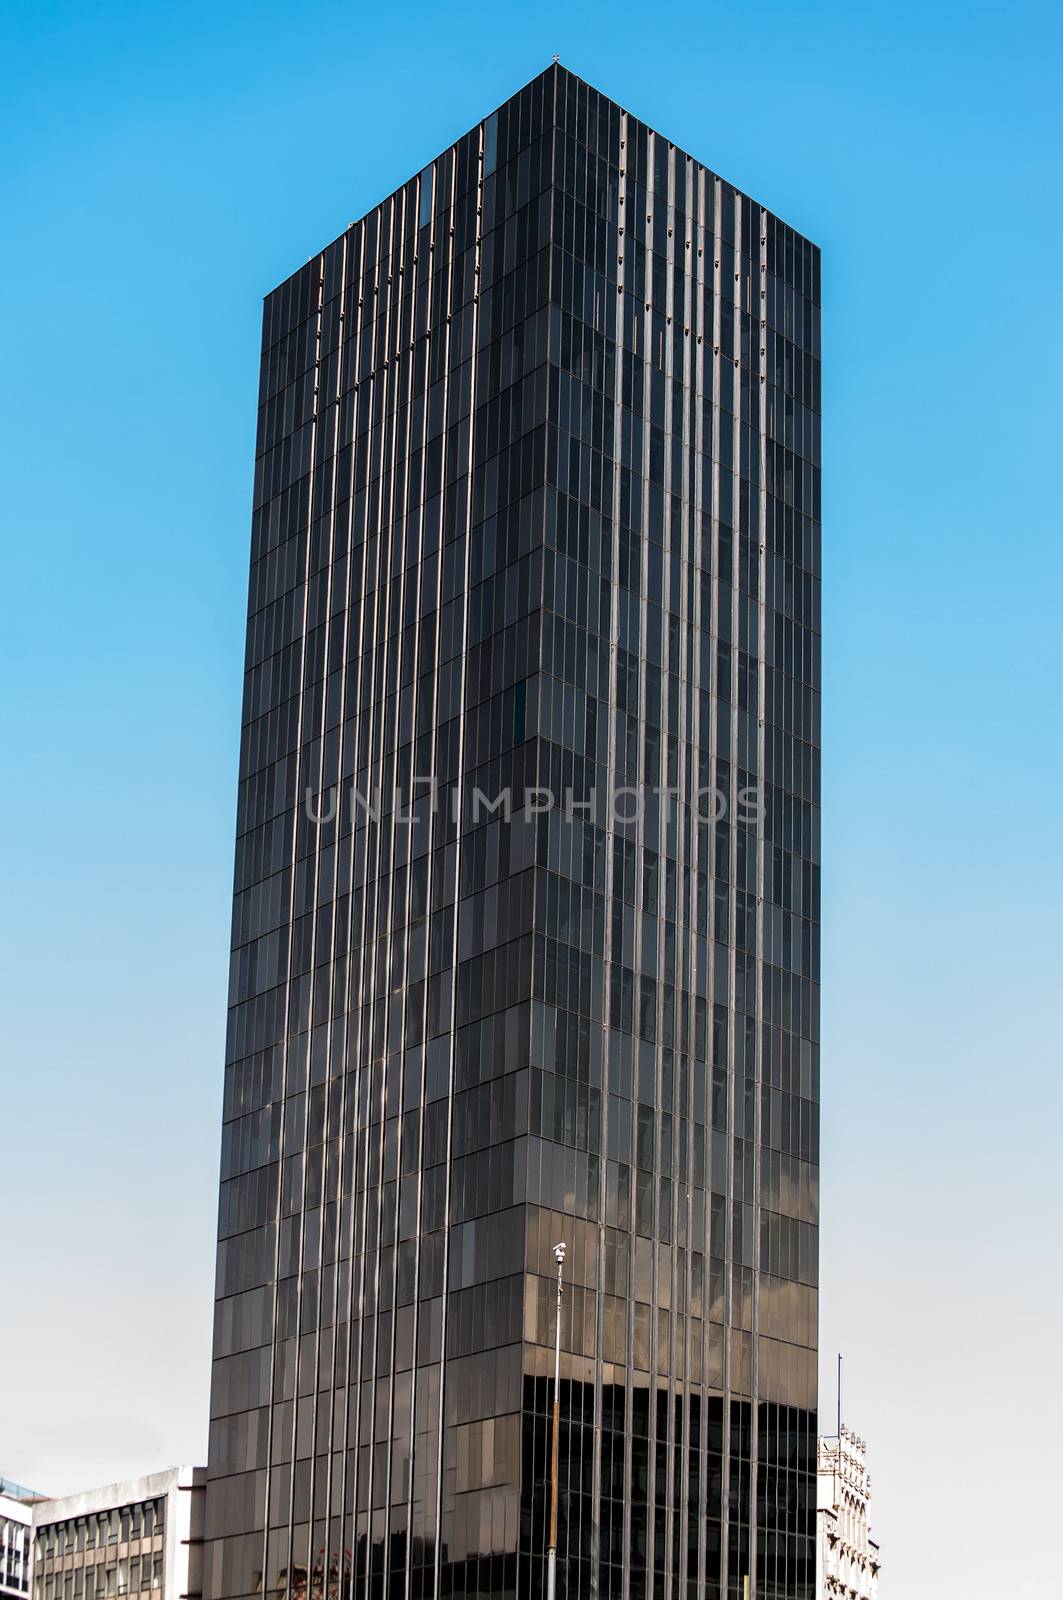 Tall black sleek looking skyscraper in Mexico City